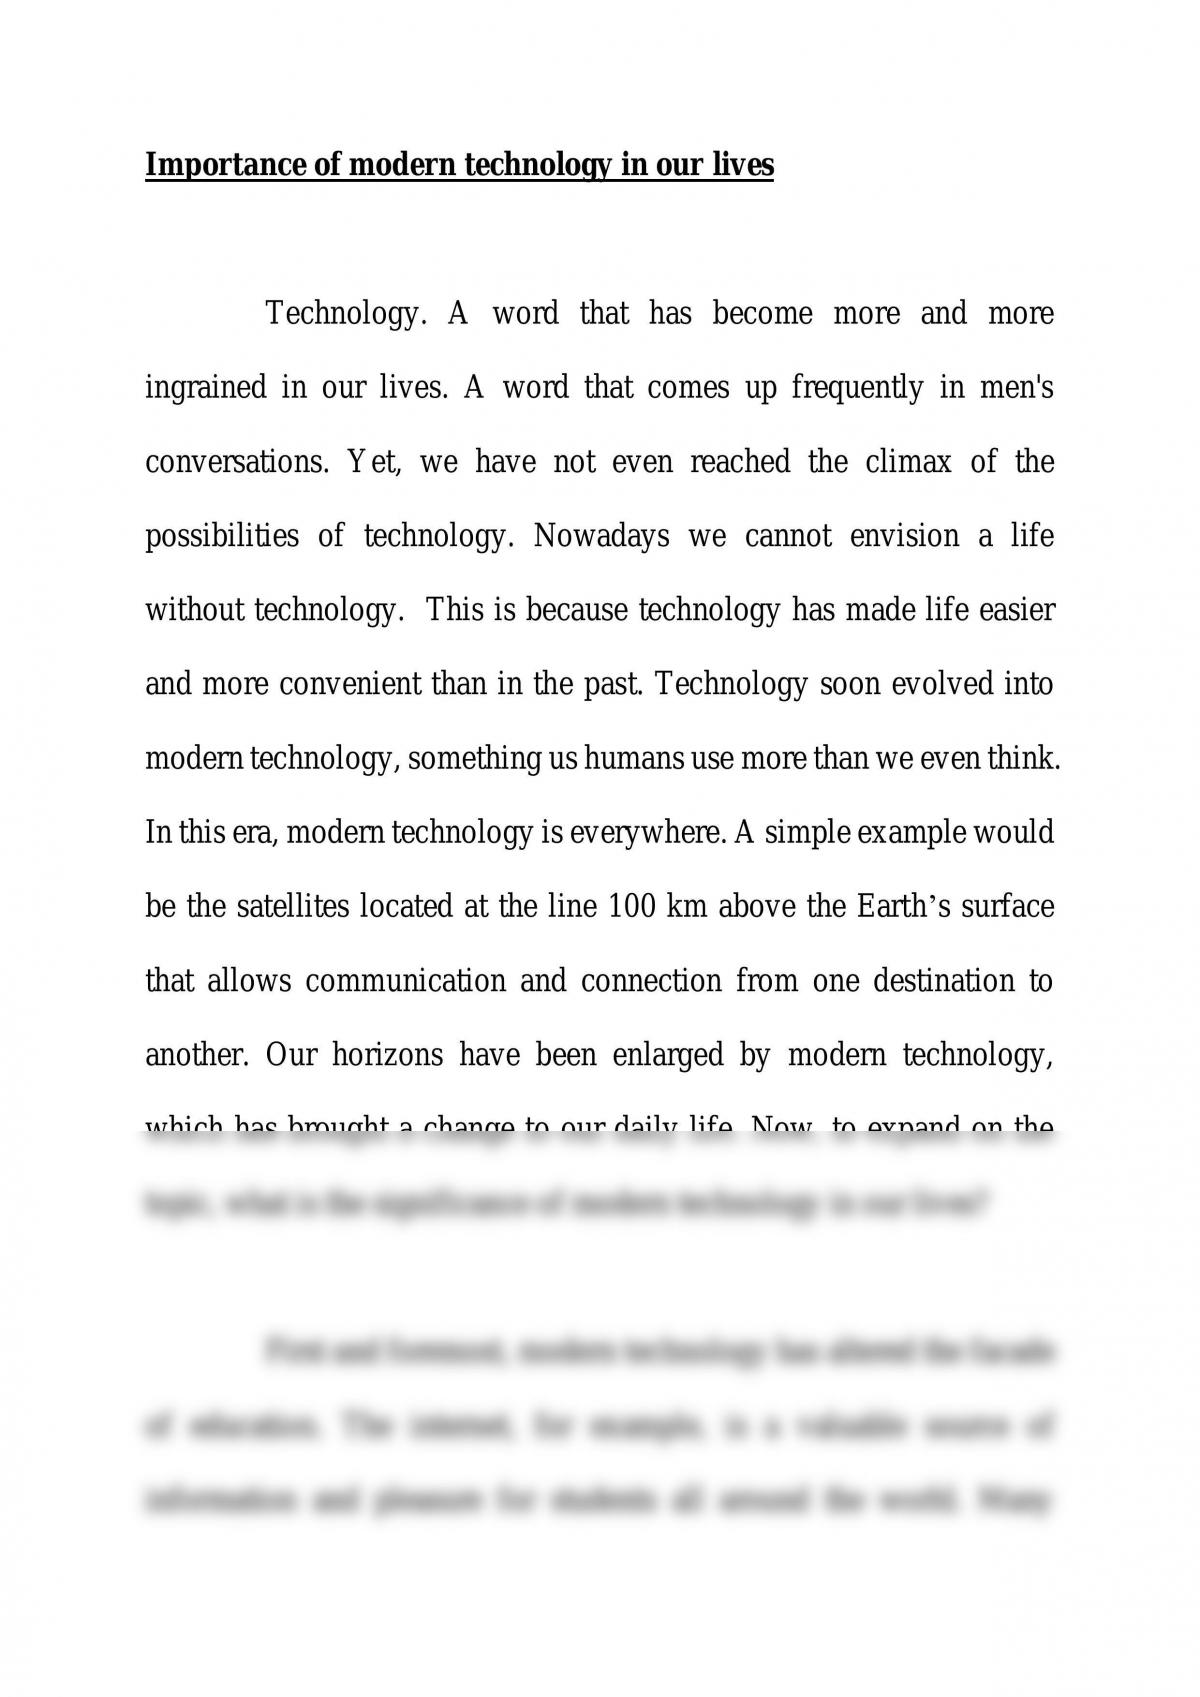 technology essay bac